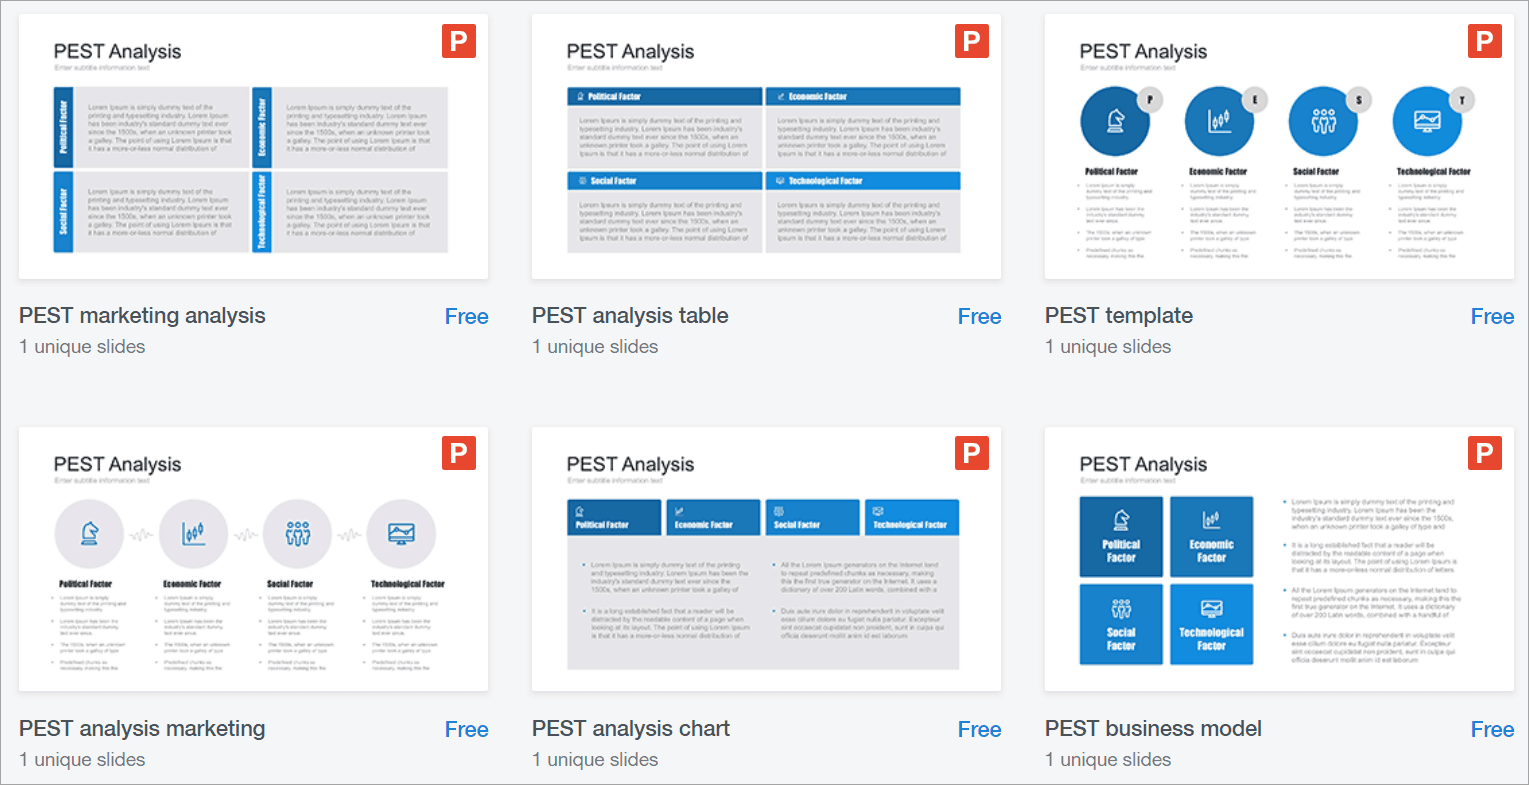 HiSlide's Free PEST templates